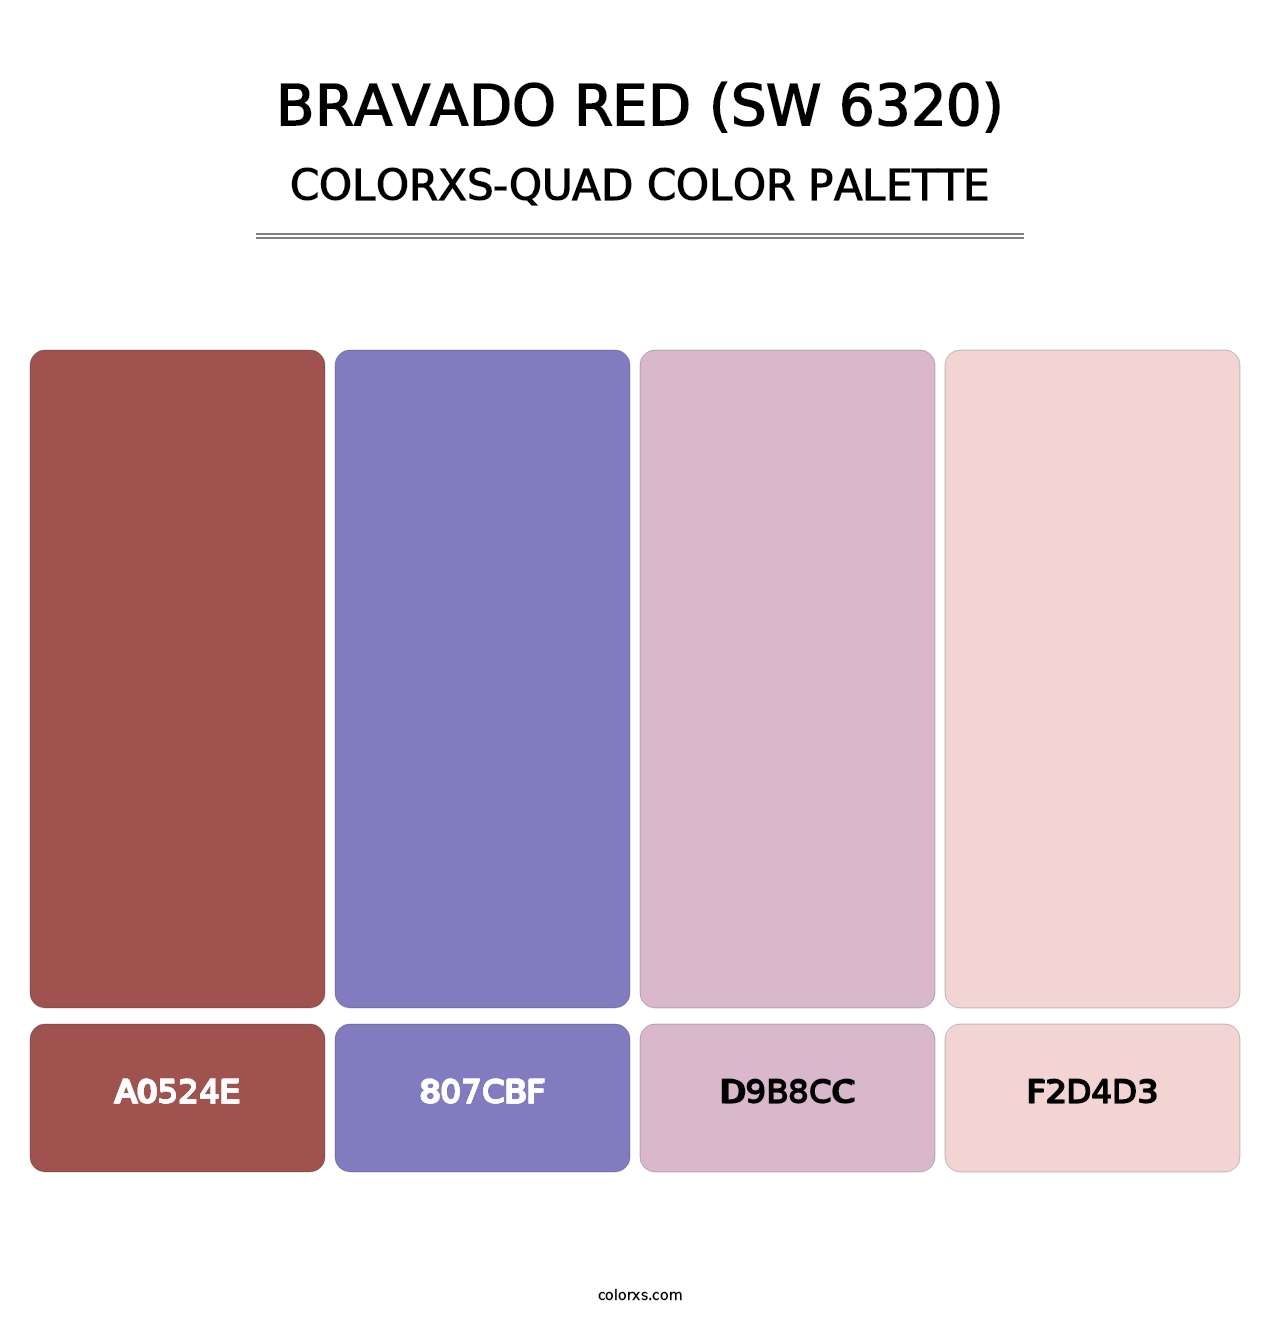 Bravado Red (SW 6320) - Colorxs Quad Palette